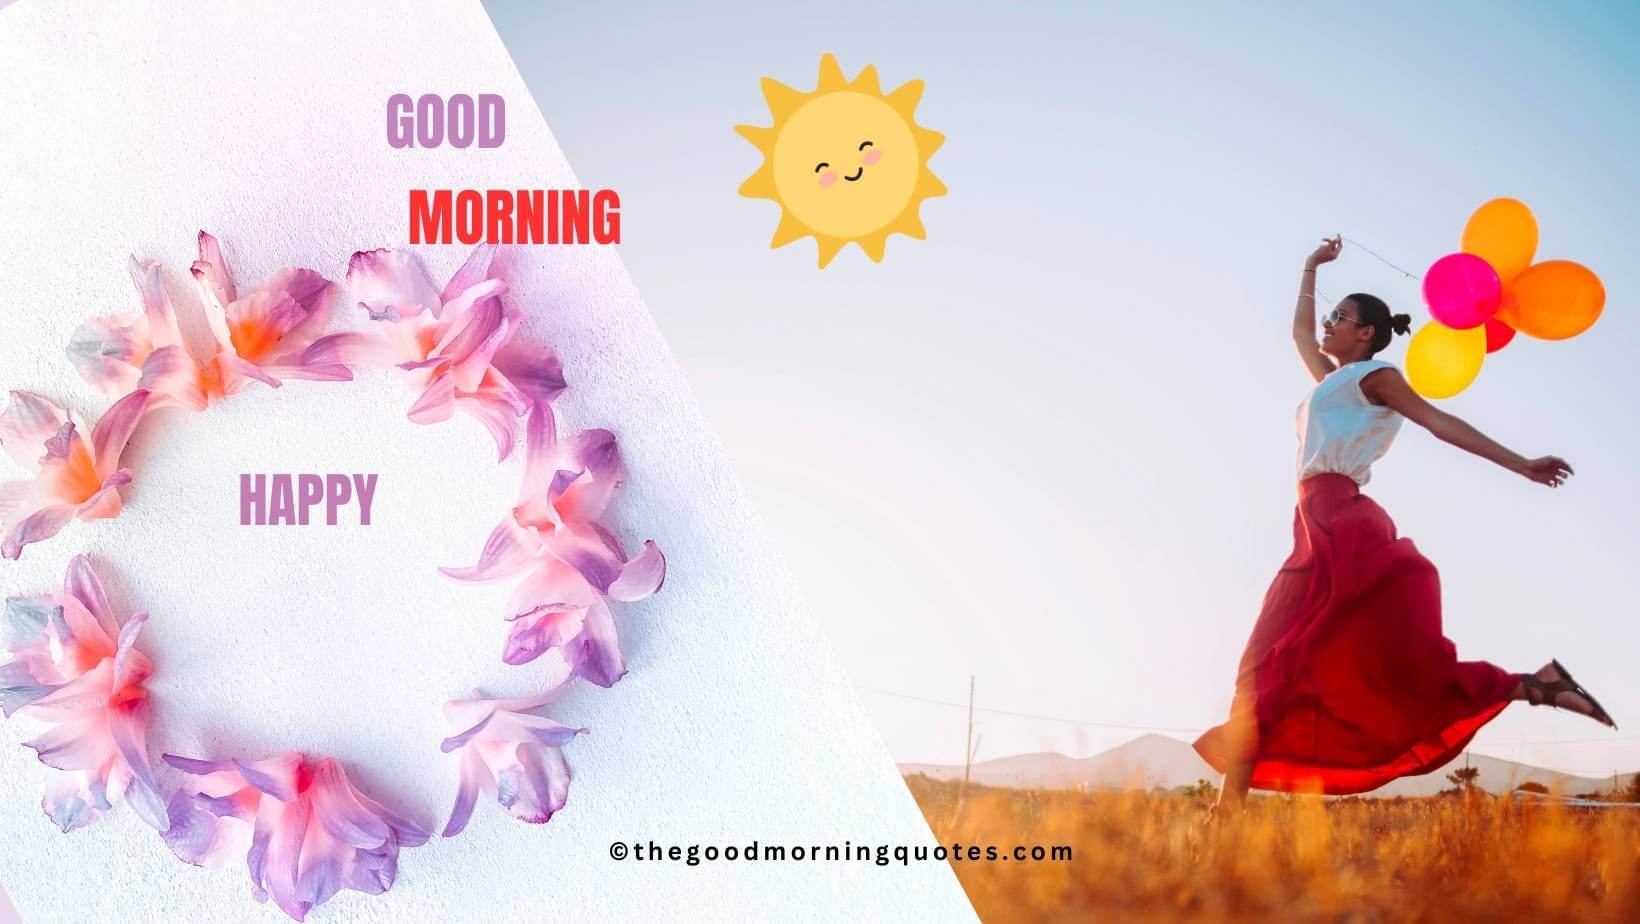 Happy Good Morning Quotes in Hindi